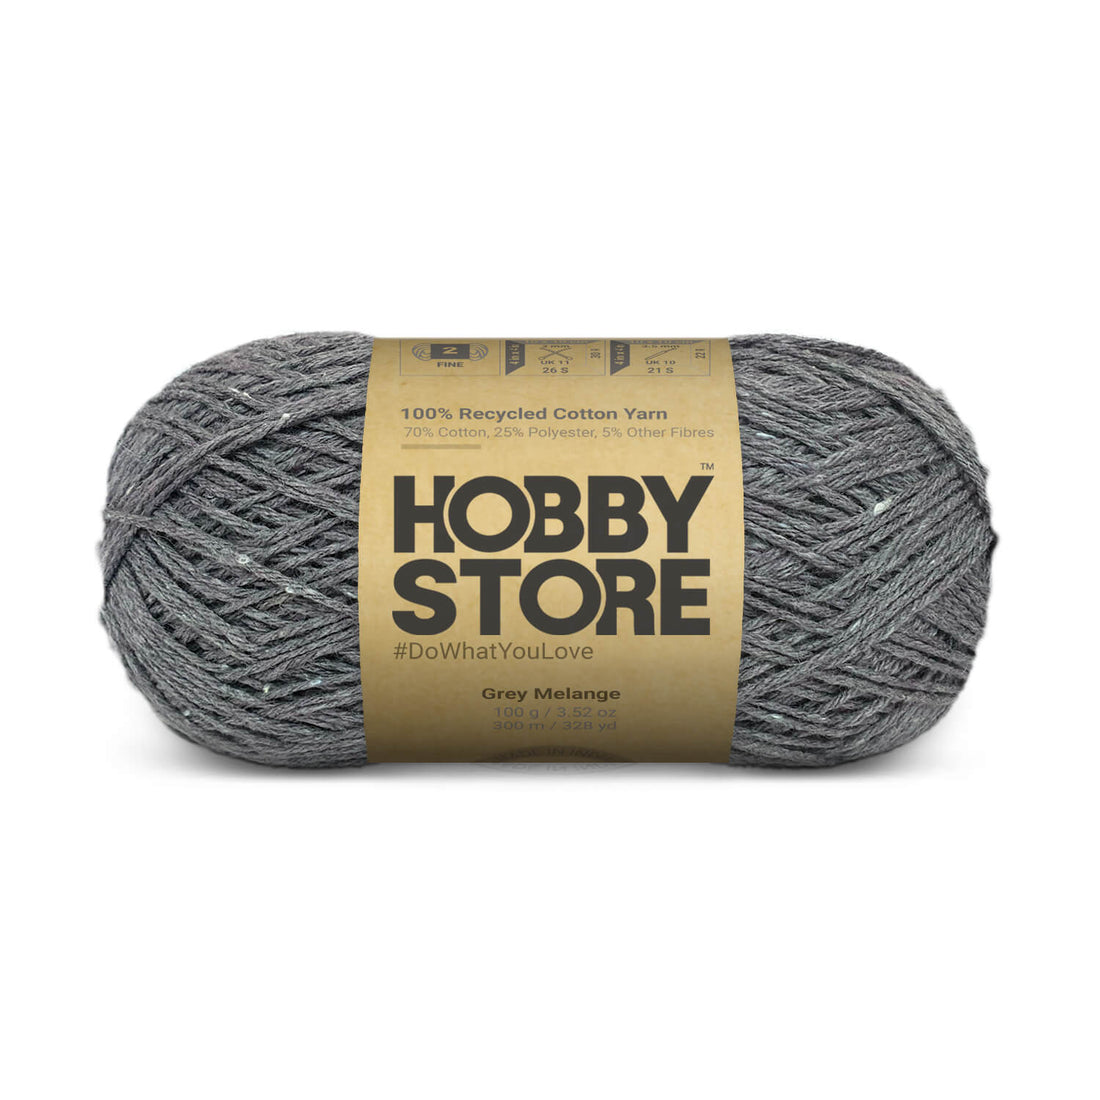 Hobby Store Recycled Cotton Yarn - Grey Melange 8926